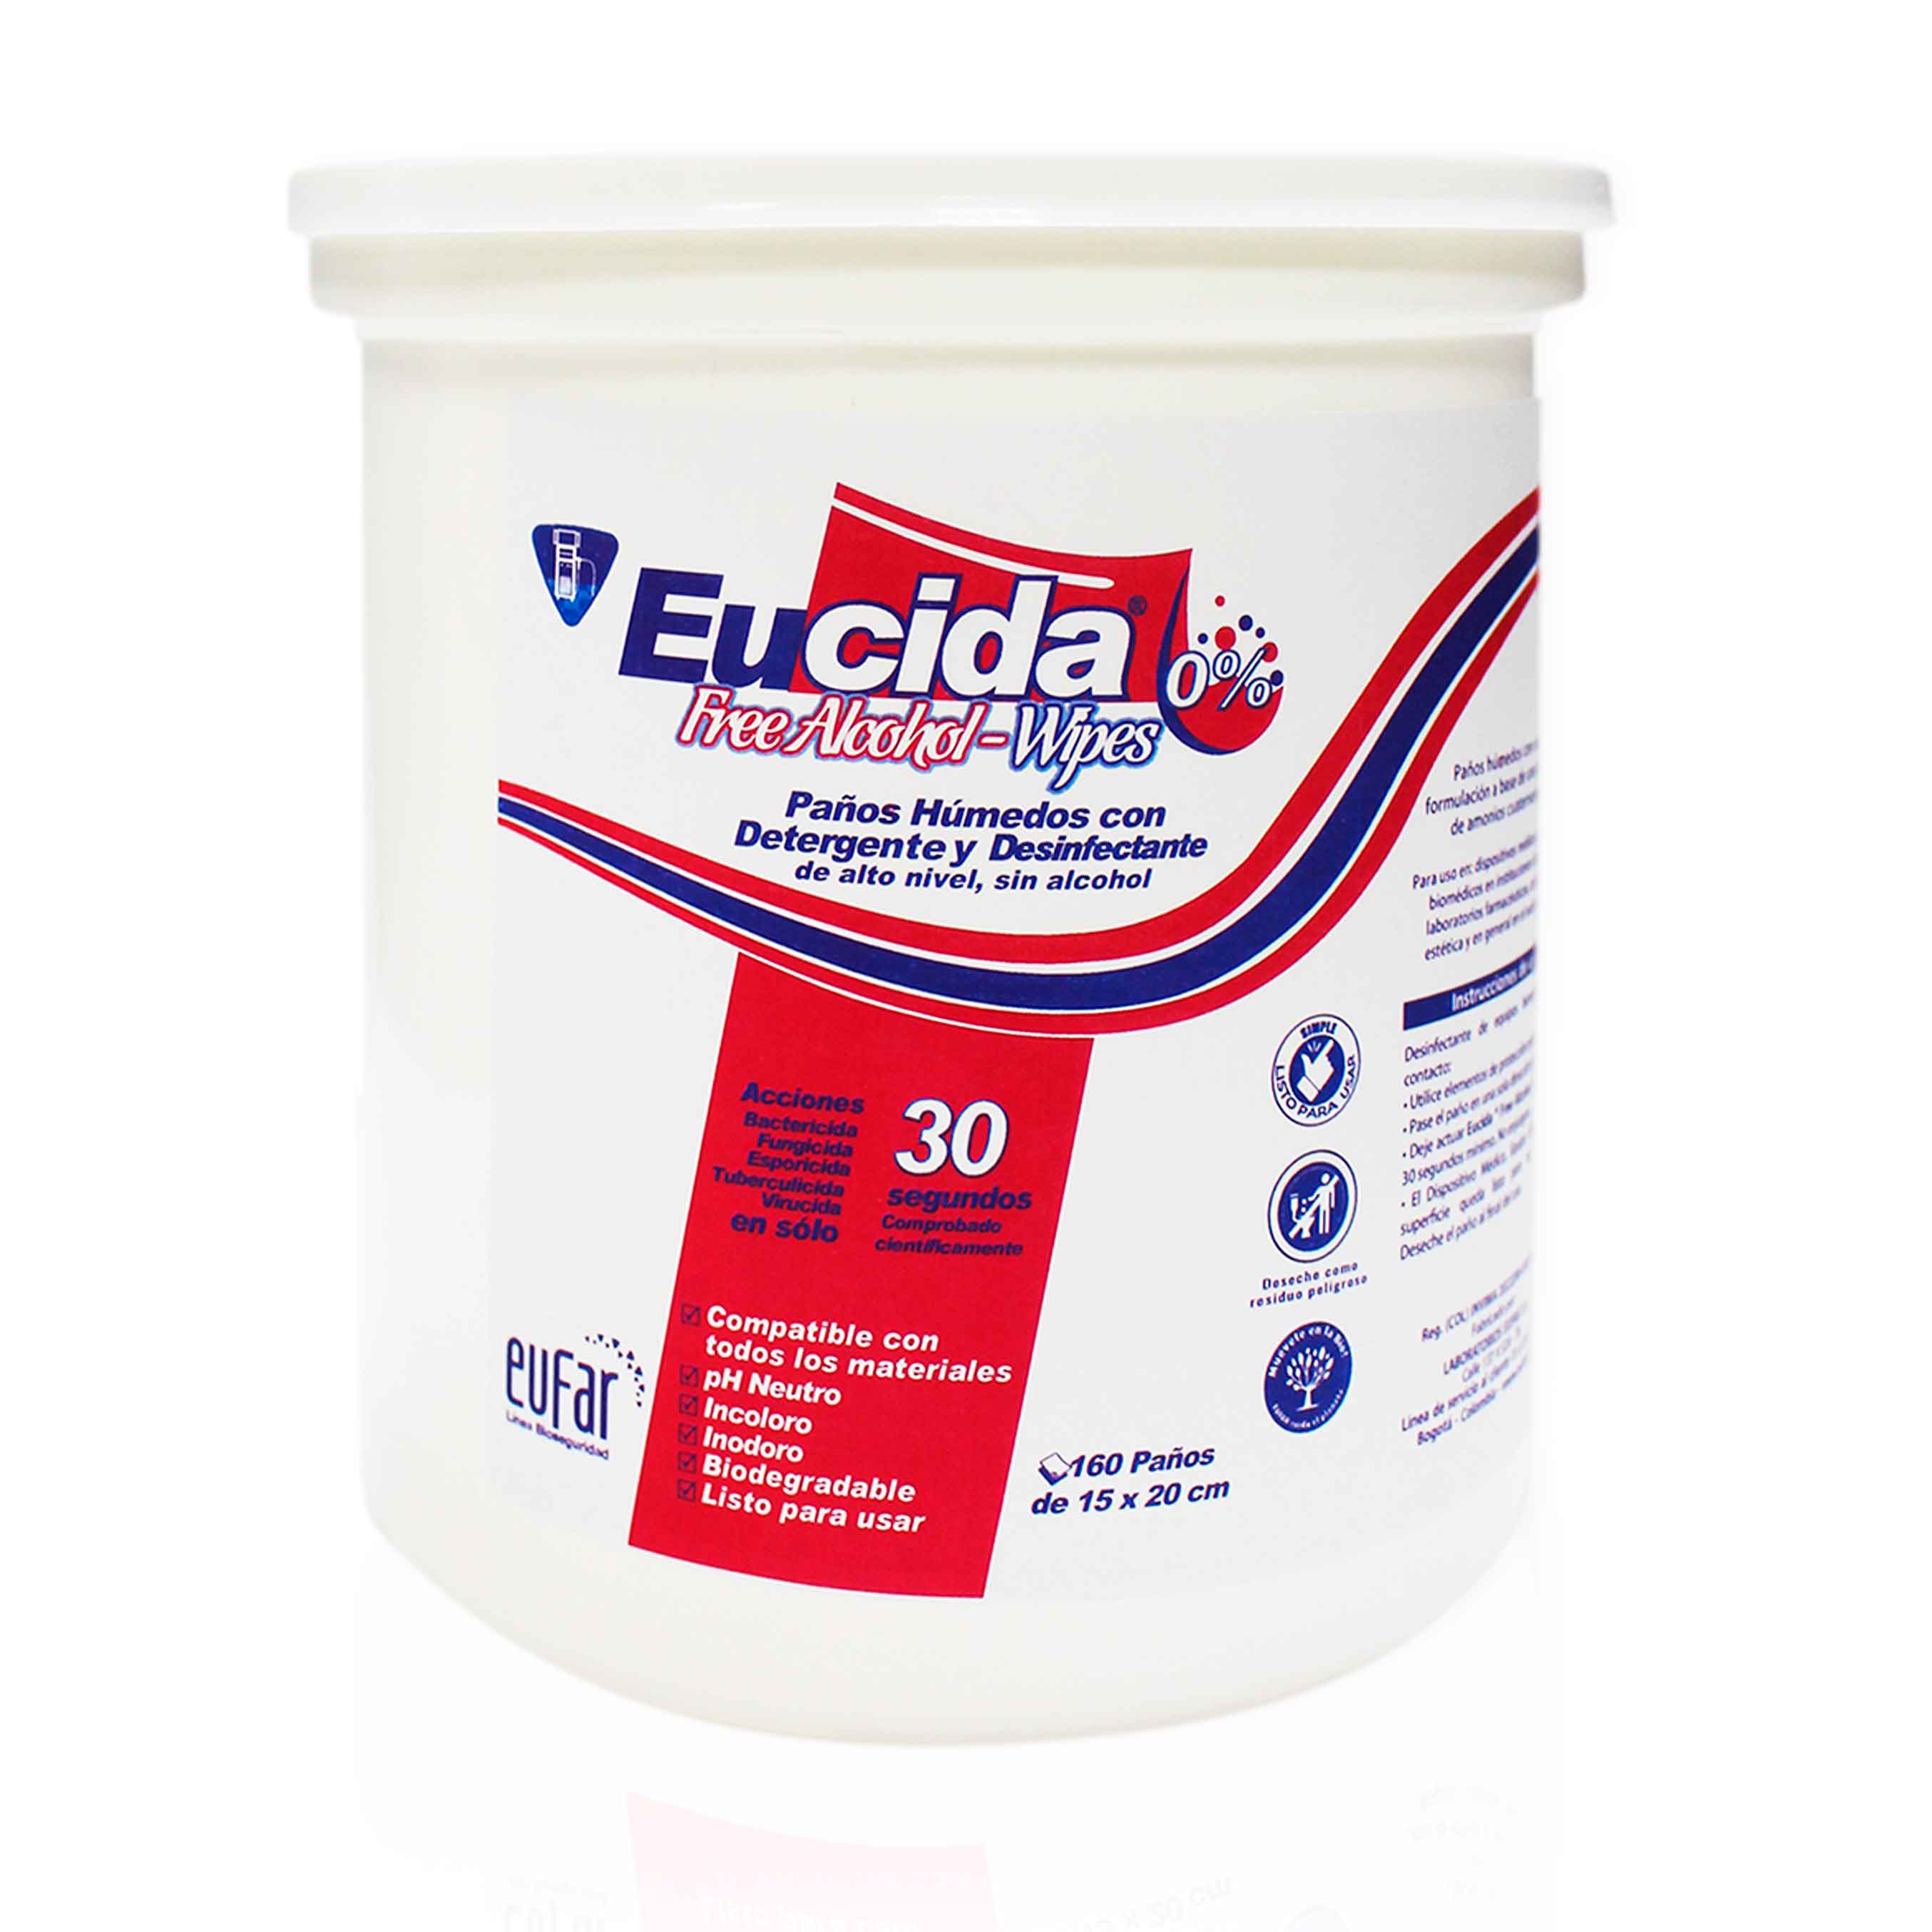 Eucida Wipes Free Alcohol Paños - Jelt